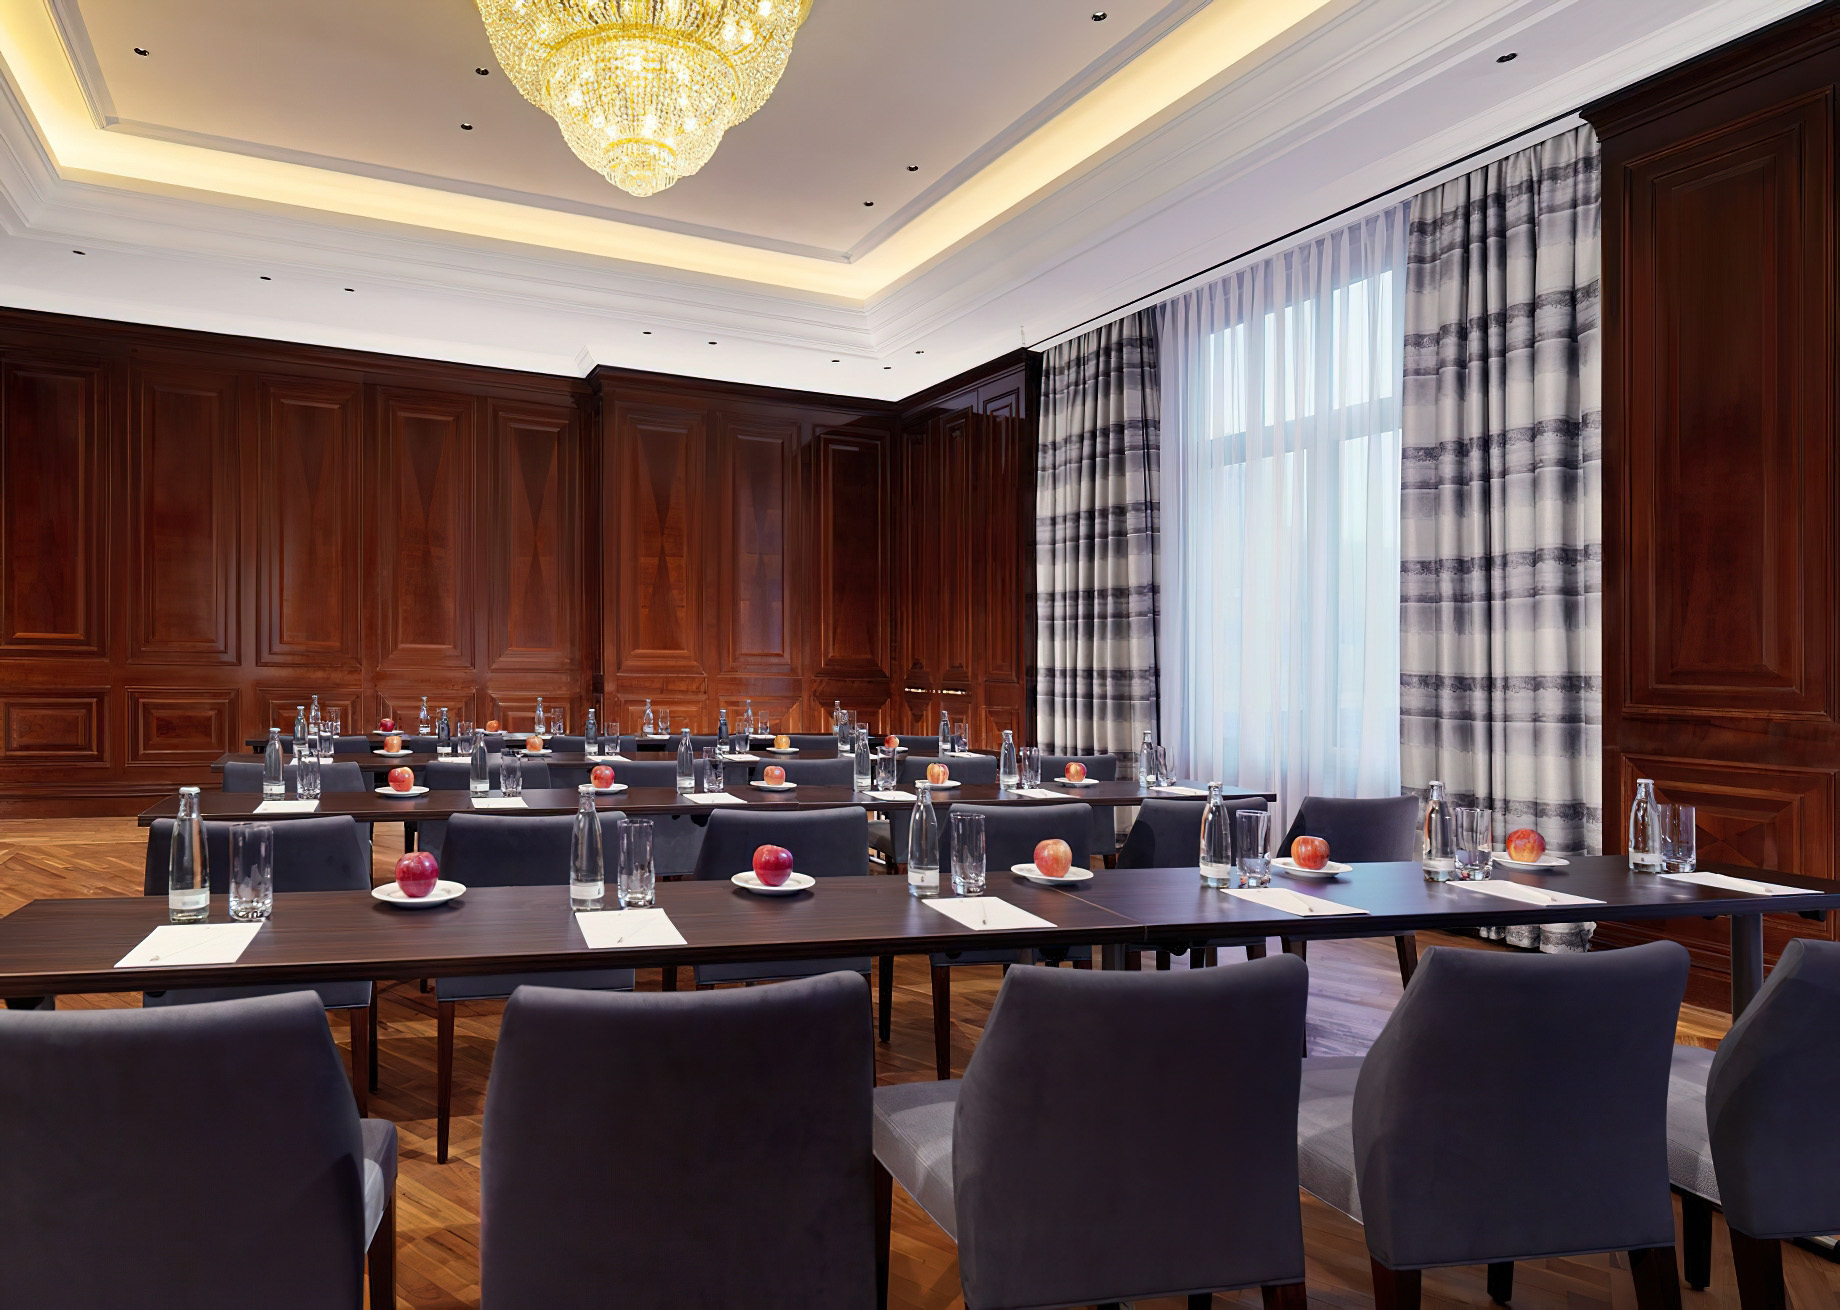 The Ritz-Carlton, Berlin Hotel - Berlin, Germany - Meeting Room